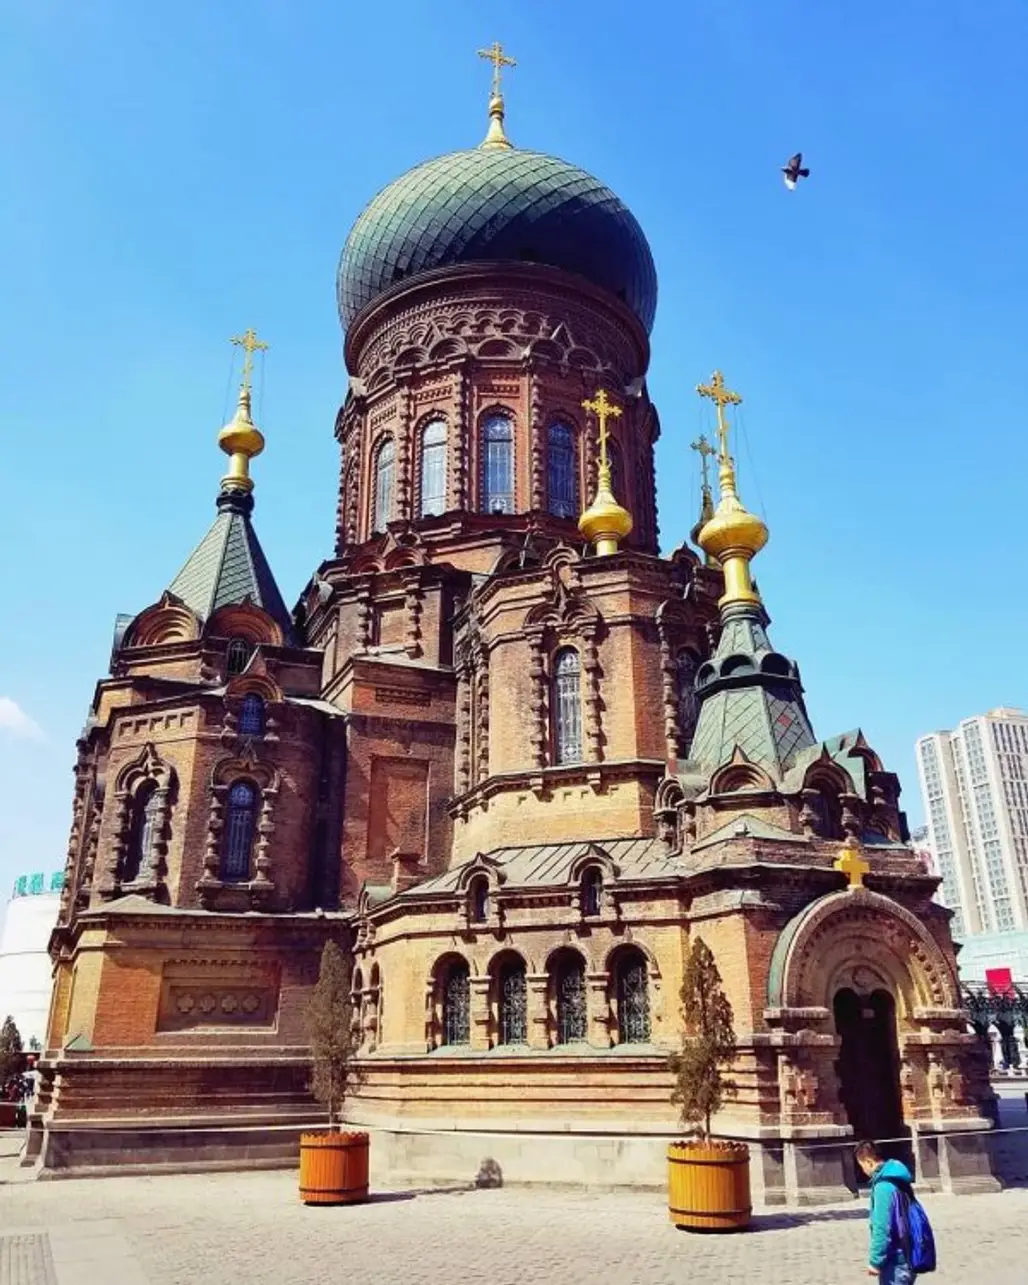 Landmark, Dome, Place of worship, Architecture, Byzantine architecture,